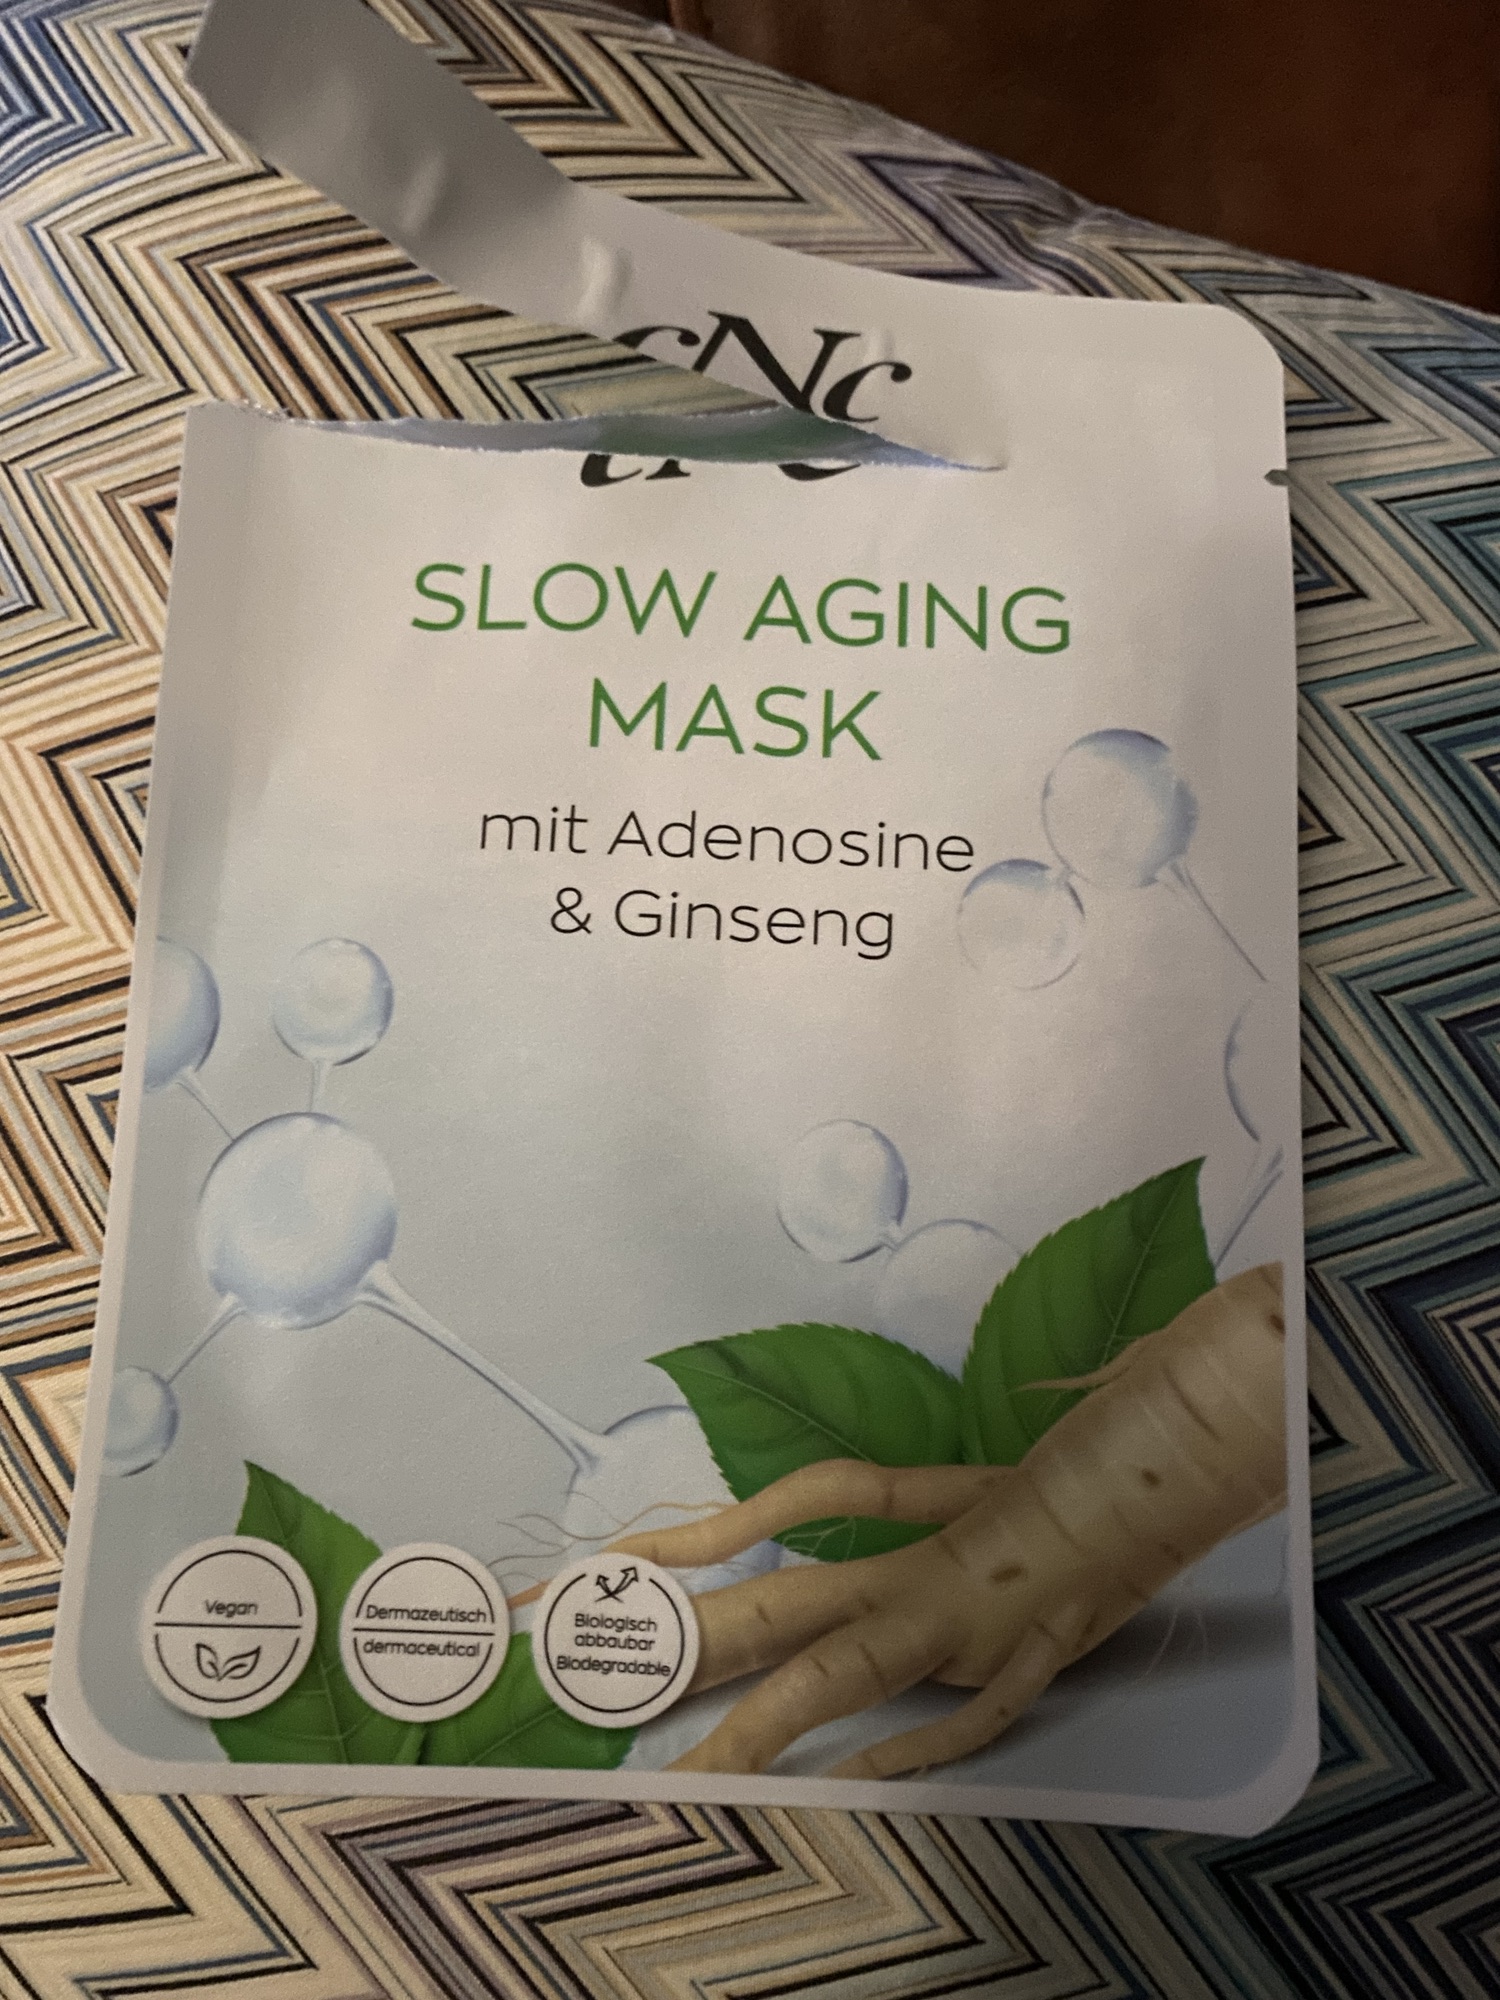 cNc Slow aging mask